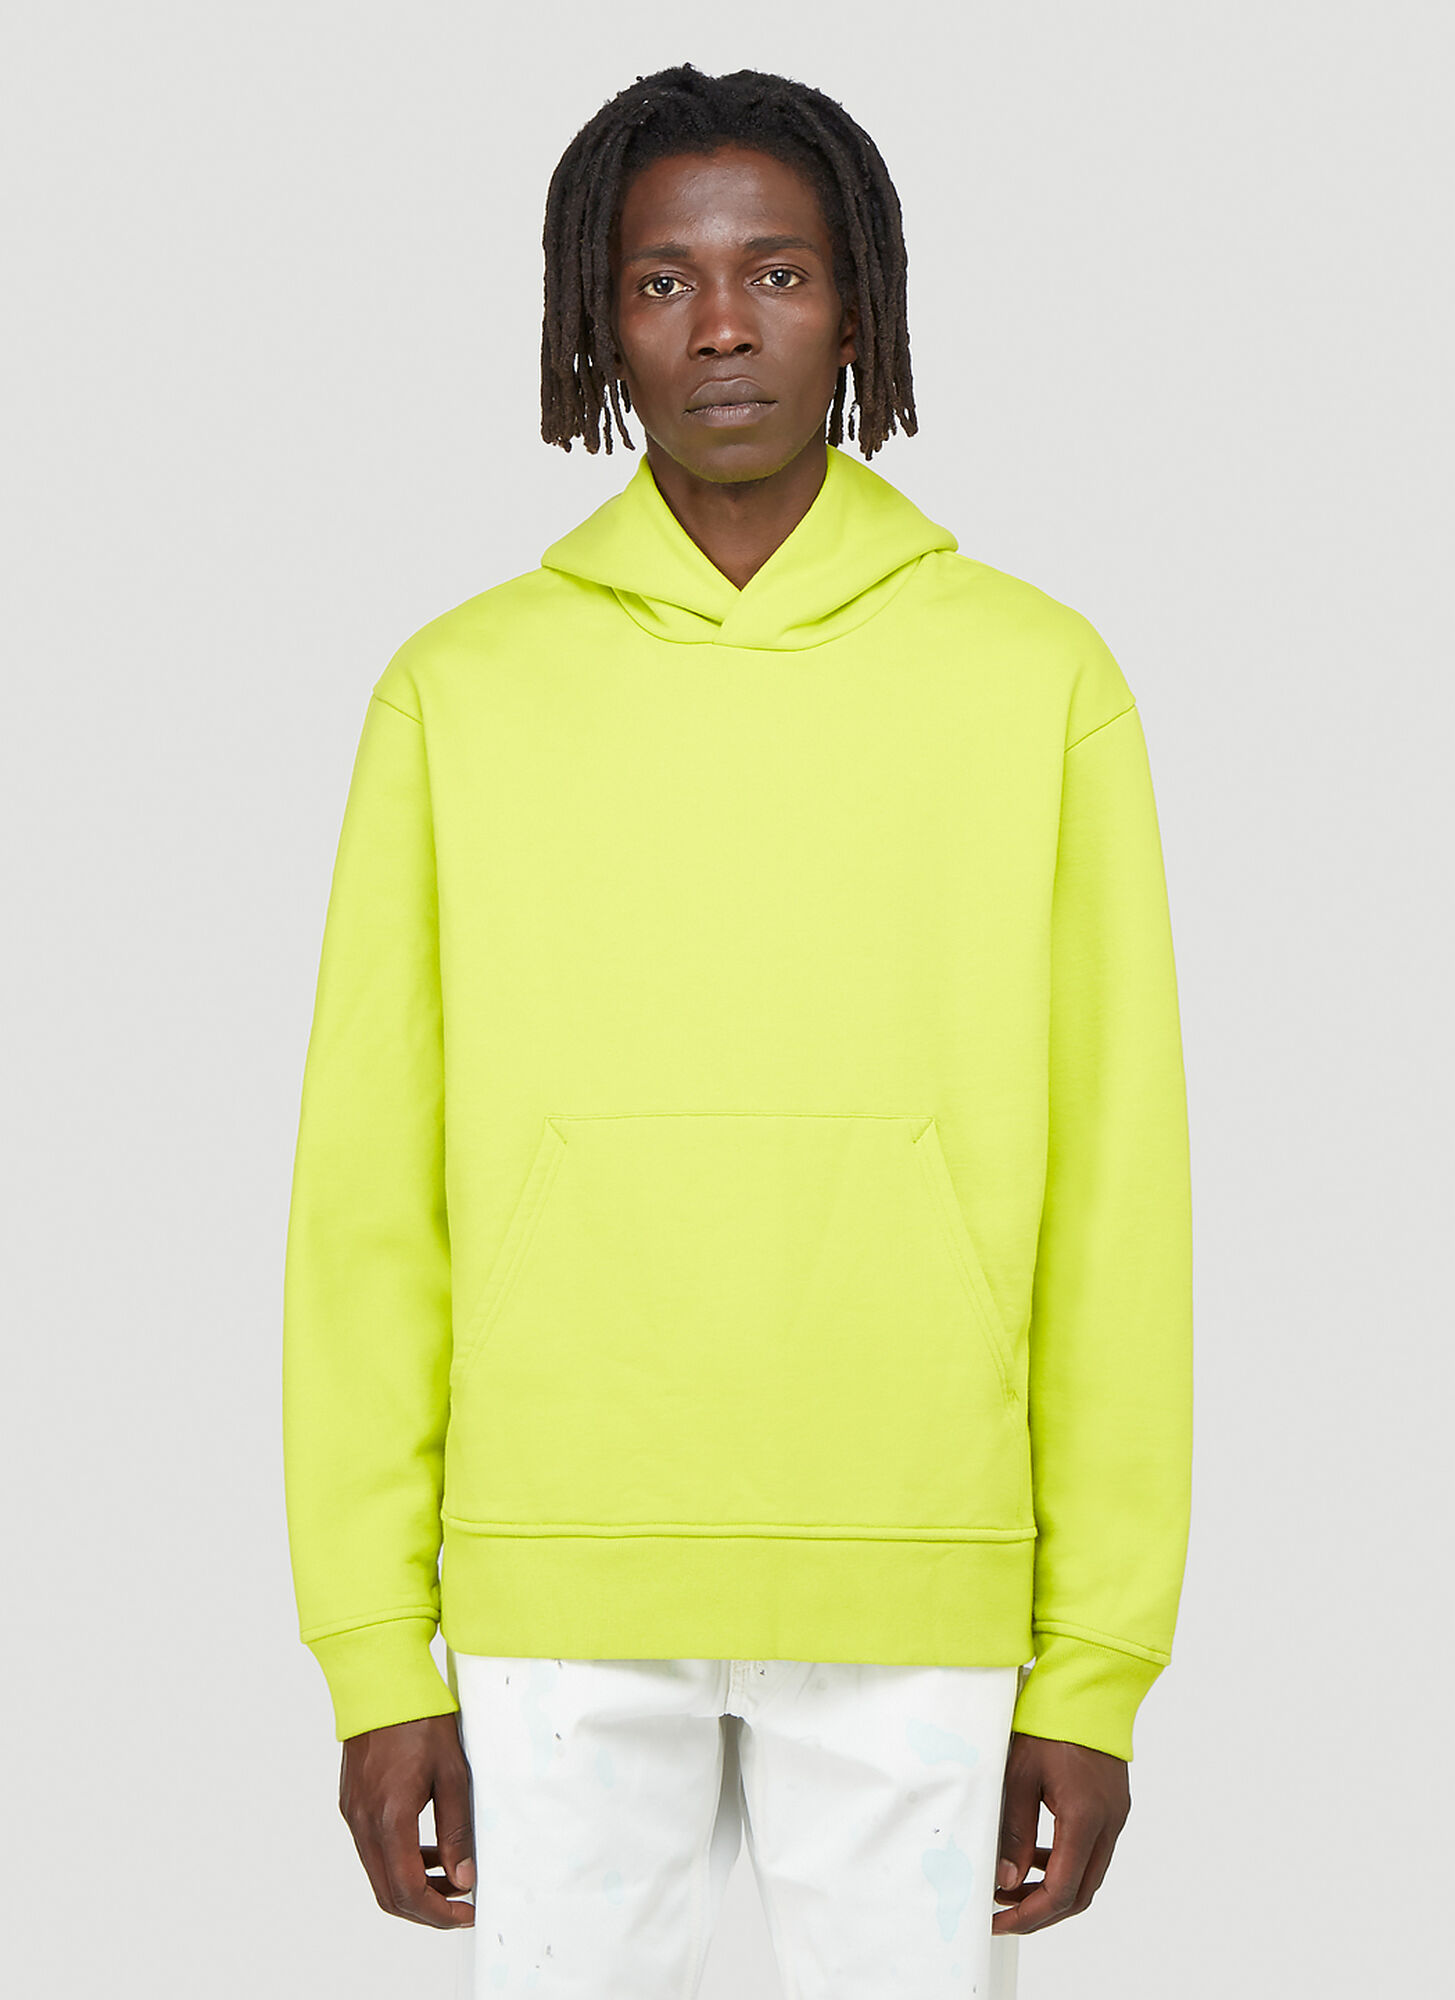 Acne Studios Hooded Sweatshirt in Yellow size XL | The Fashionisto